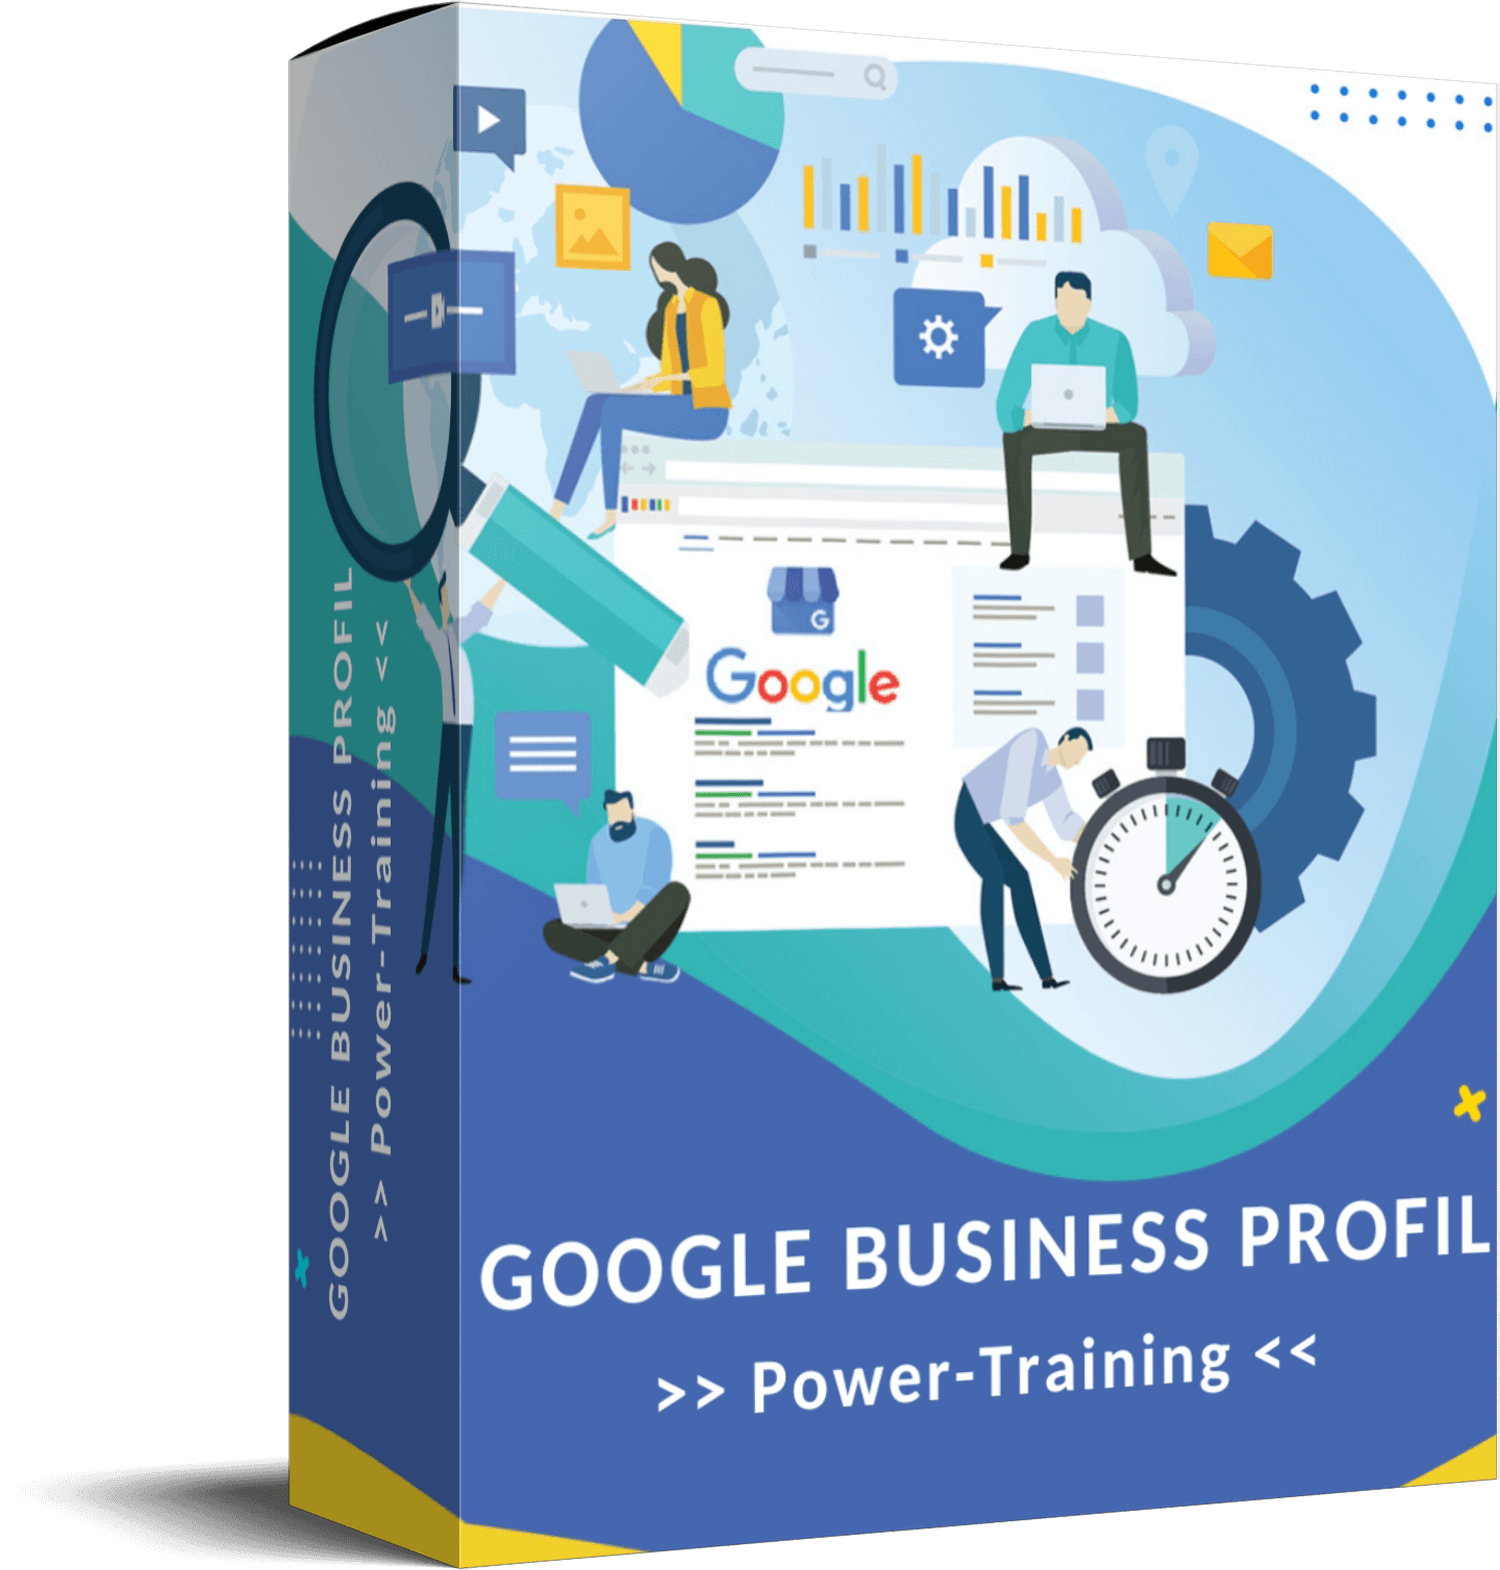 Google Business Profil - Power-Training